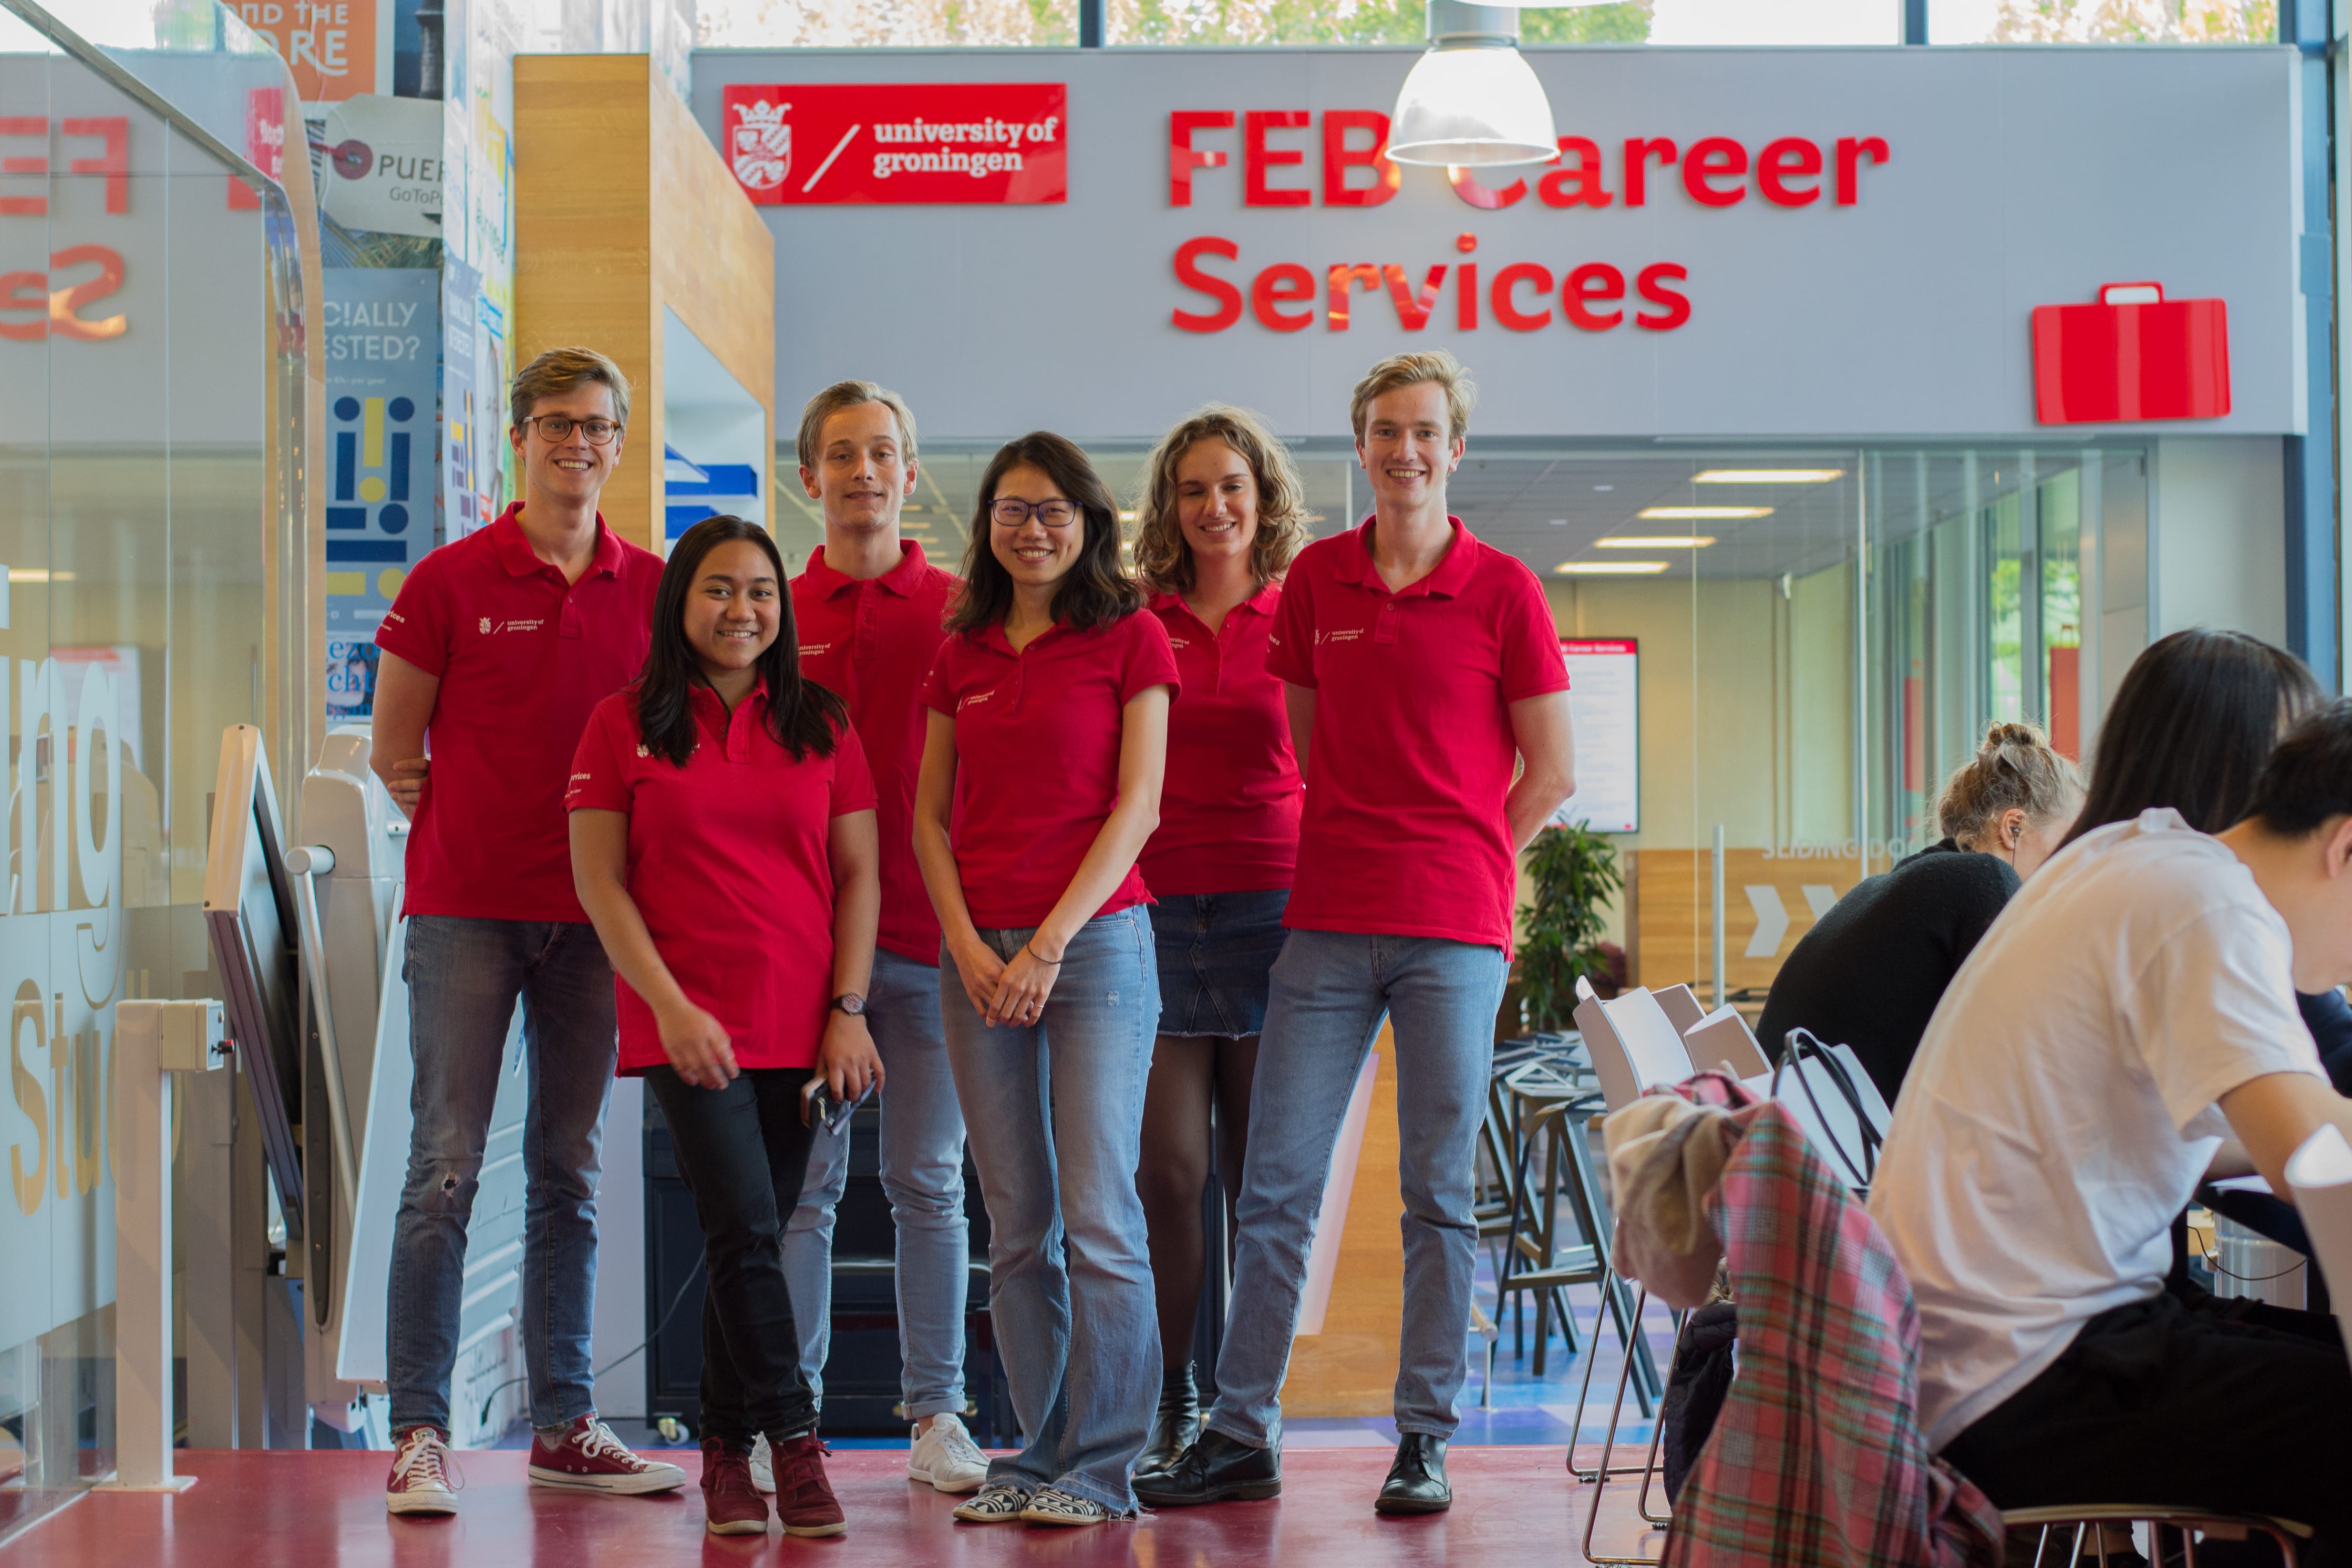 FEB Career Services student team: Jorrit, Daindra, Bryan, Yun Chun, Elske and Niels